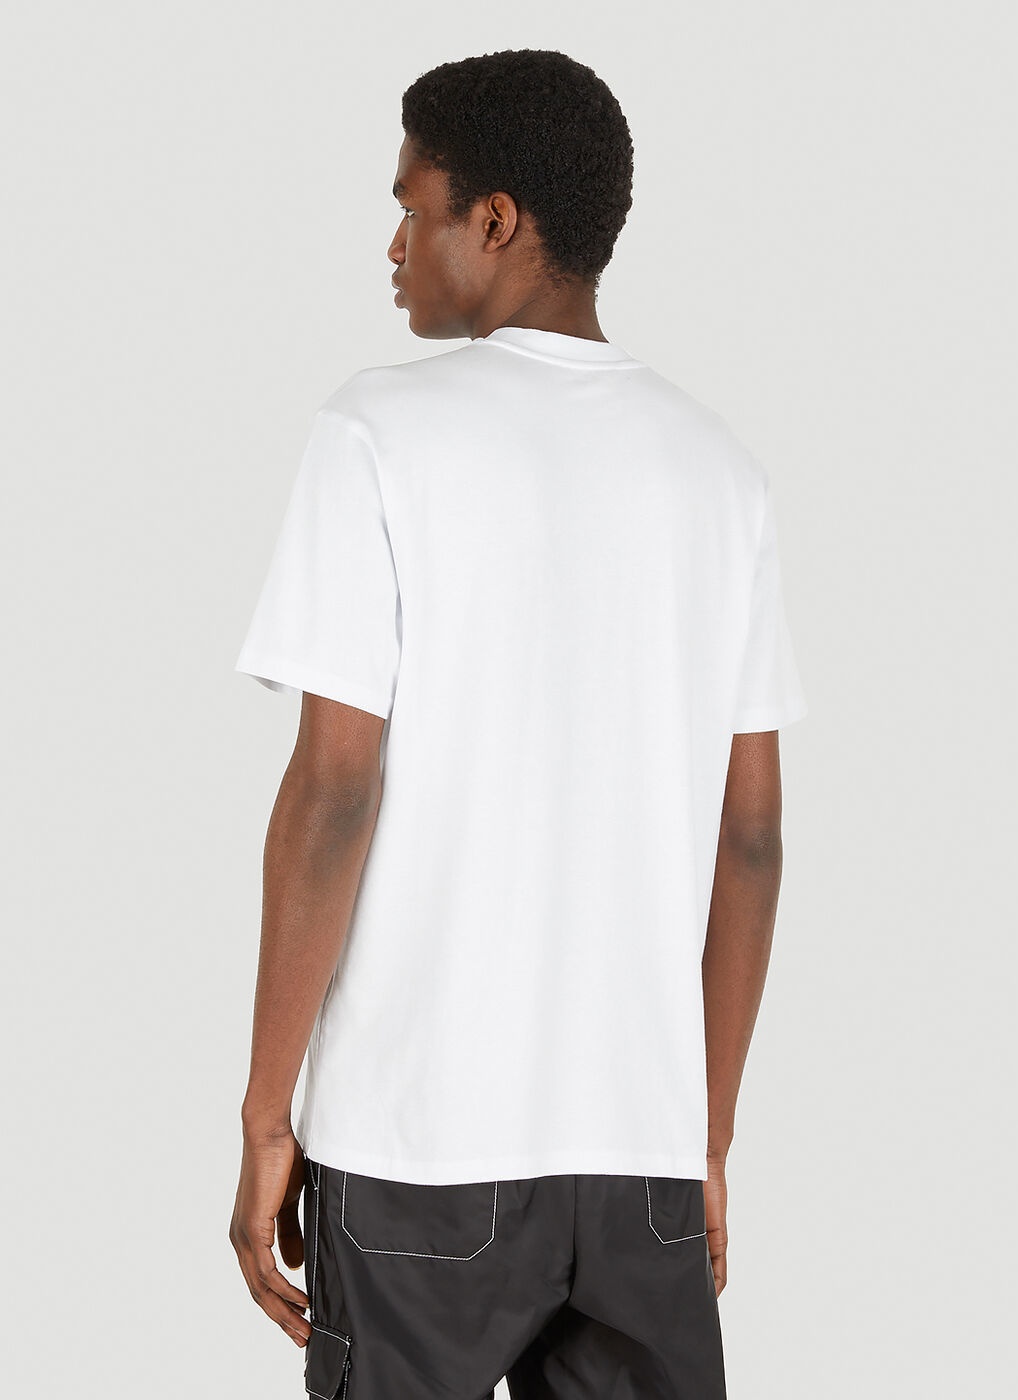 Metallic Selfie Glitch T-Shirt in White 032c